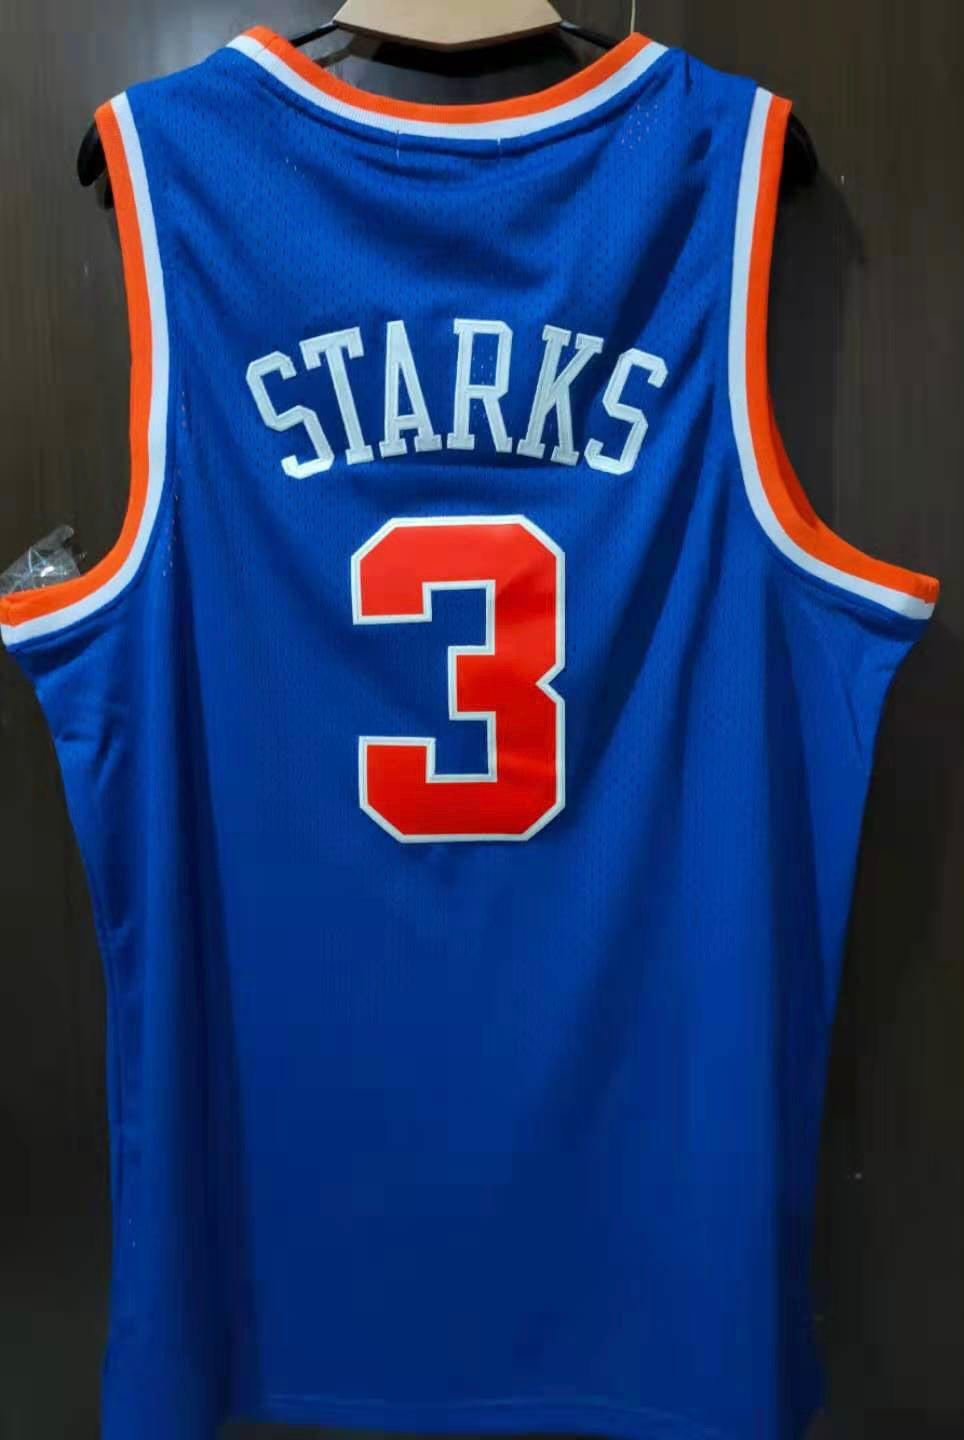 New York Knicks John Starks Jersey at